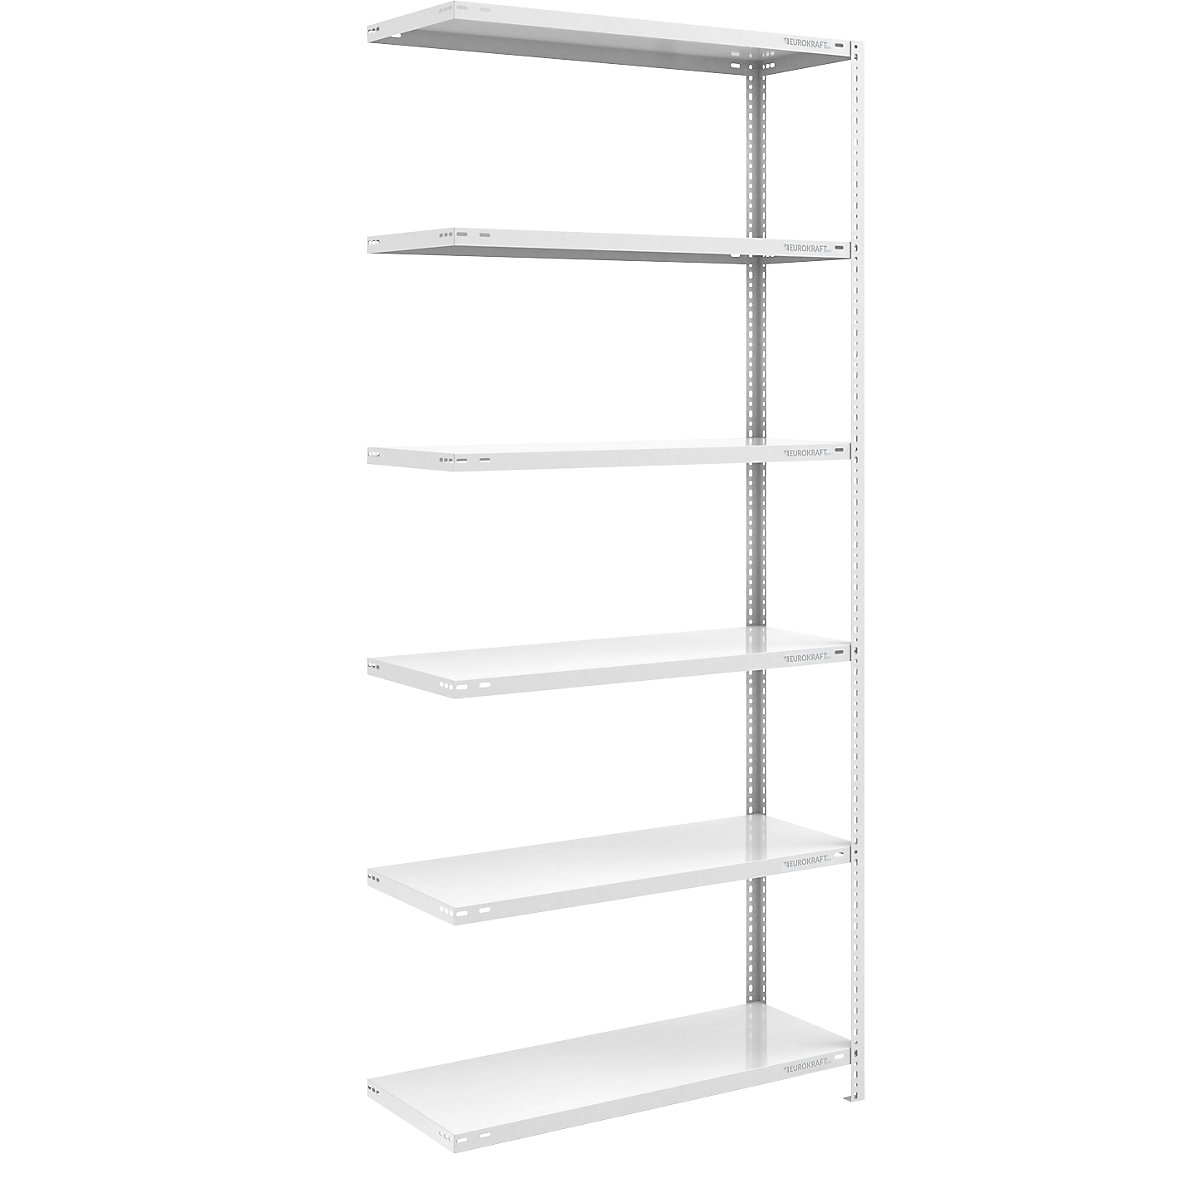 Bolt-together shelf unit, light duty, plastic coated – eurokraft pro, shelf unit height 2500 mm, shelf width 1000 mm, depth 500 mm, extension shelf unit-4